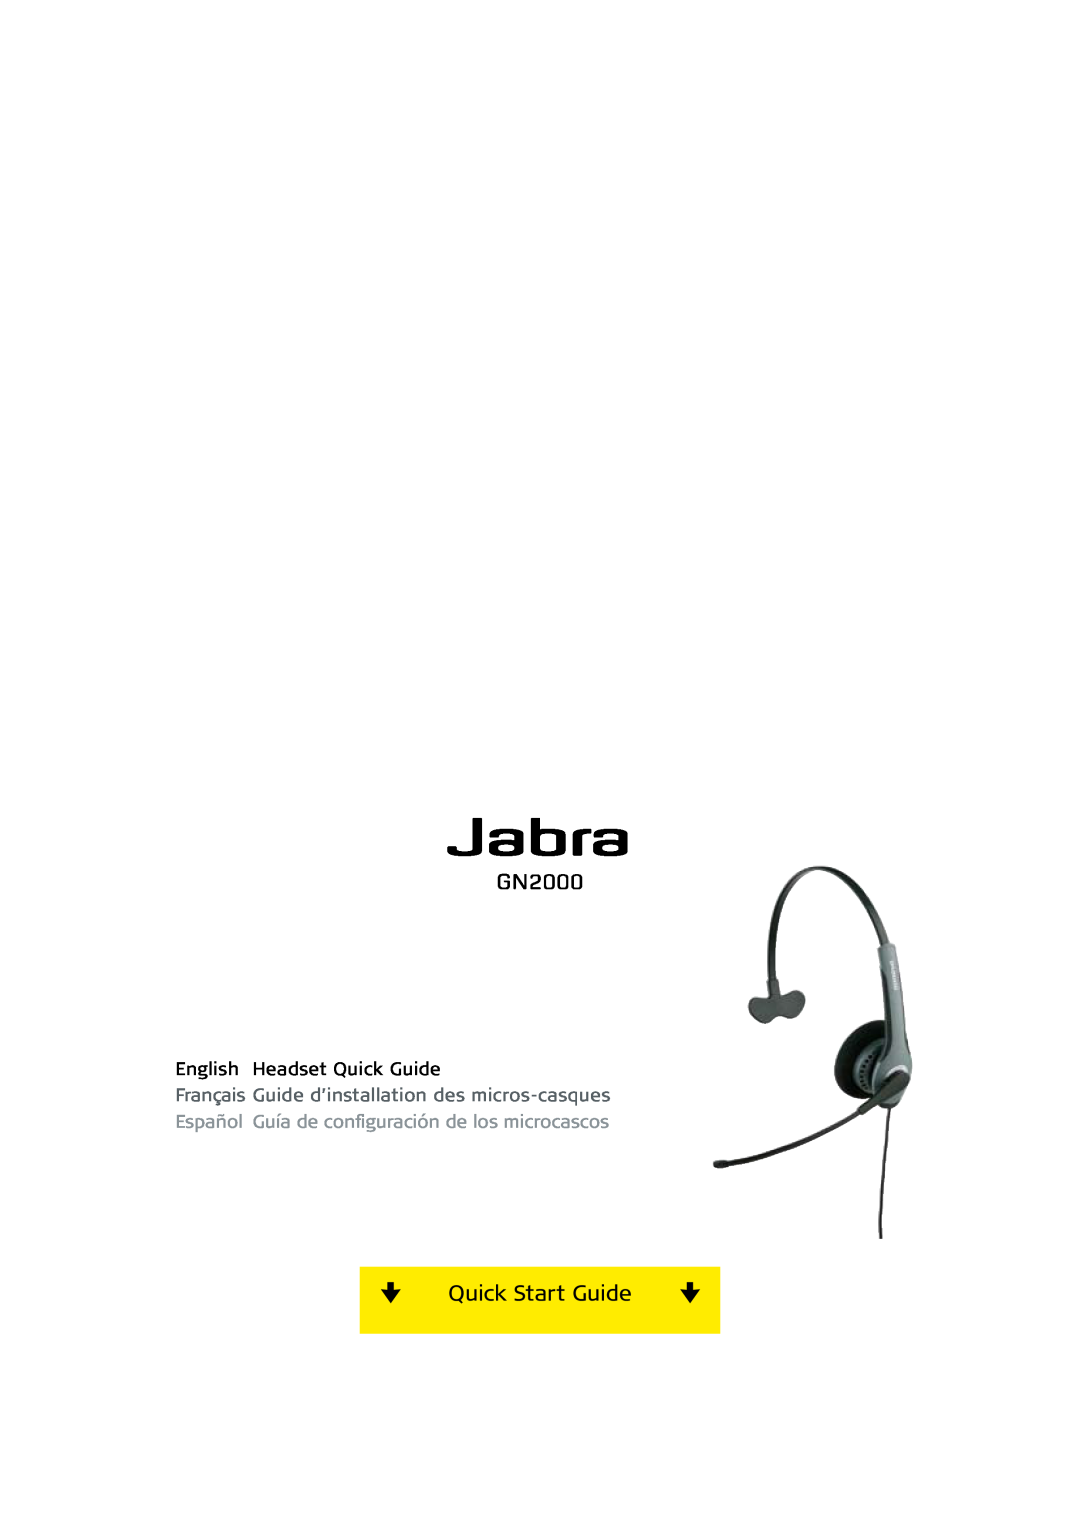 Jabra GN2000 quick start Quick Start Guide, English Headset Quick Guide 